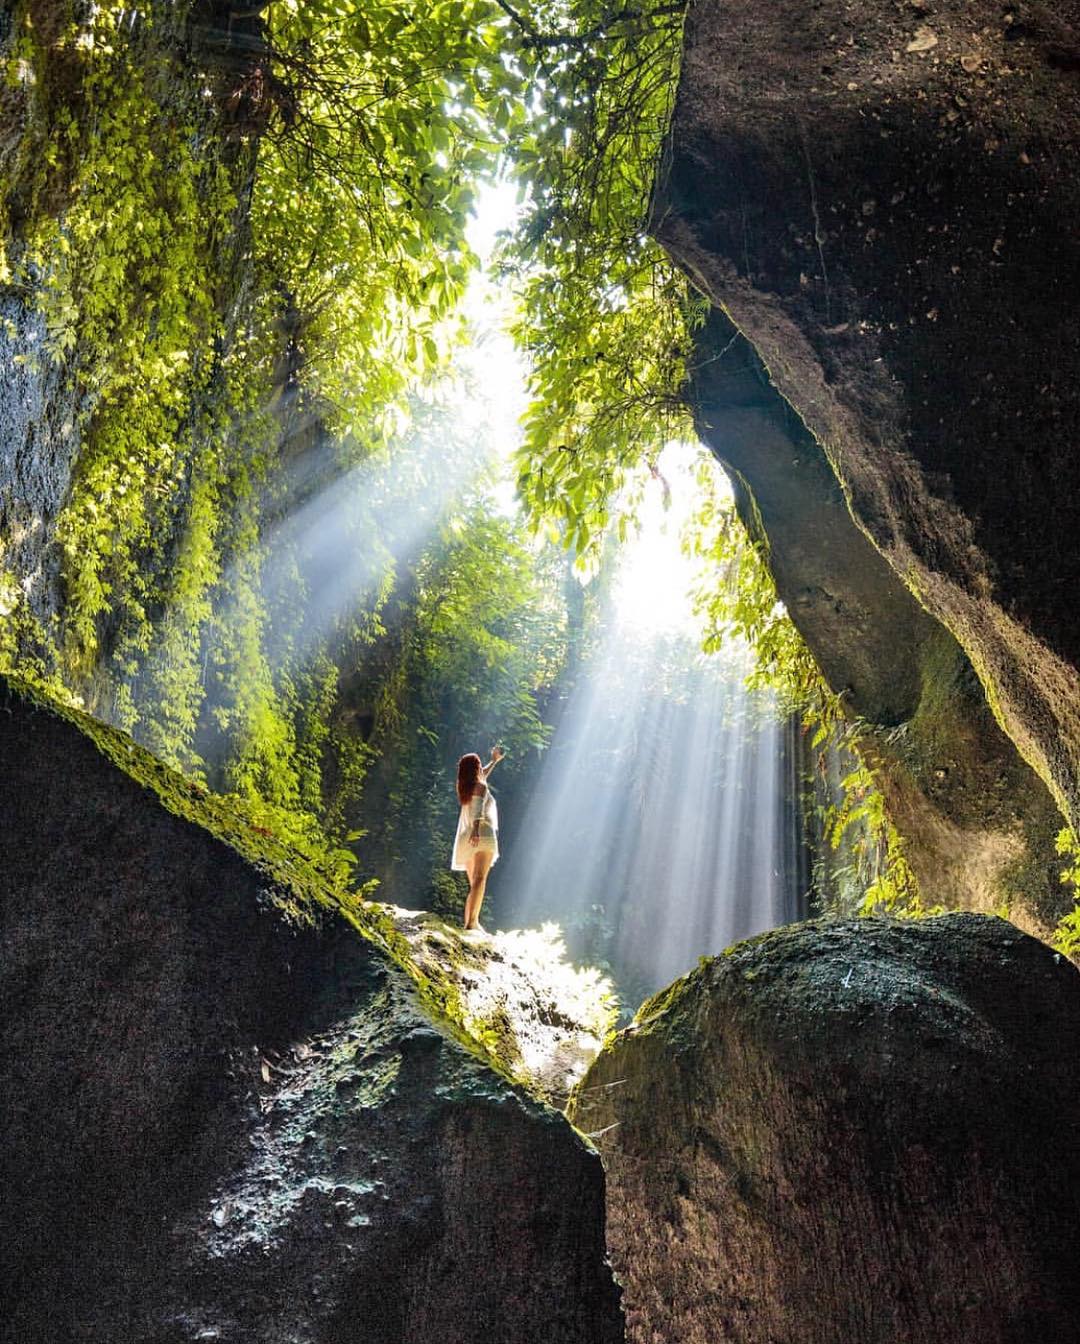 Spot foto diatas batu daun lokasi Air Terjun Tukad Cepung, Wisata Alam Tersembunyi Di Bali